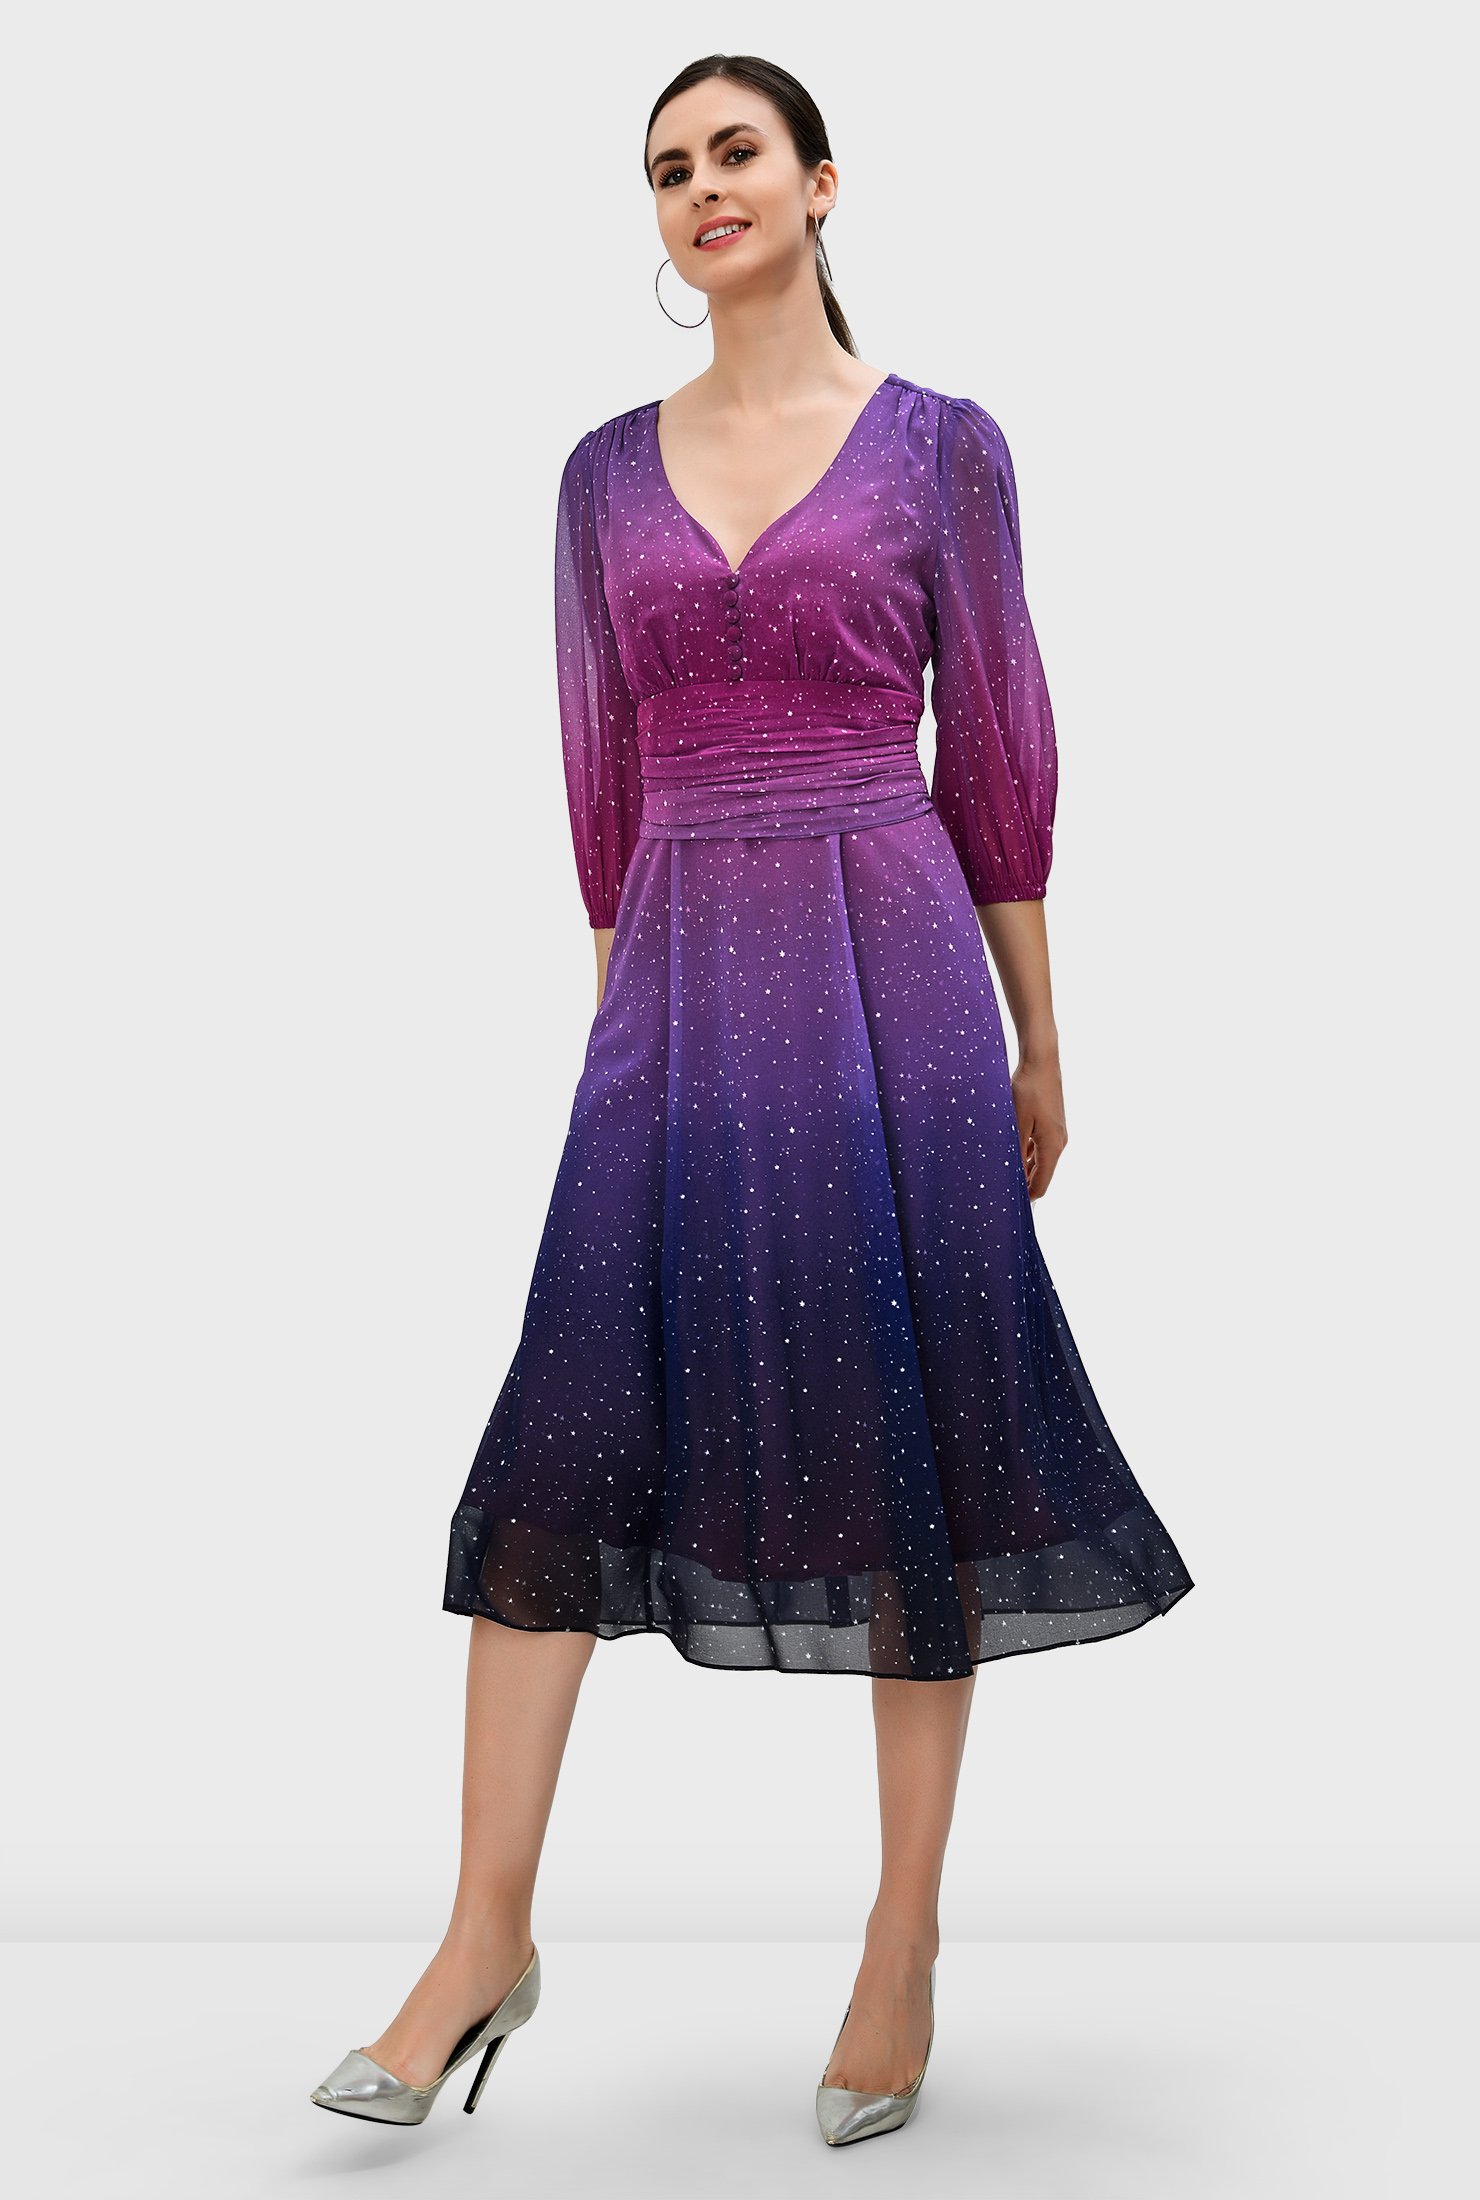 Shop Ombre star print georgette pleated empire dress | eShakti